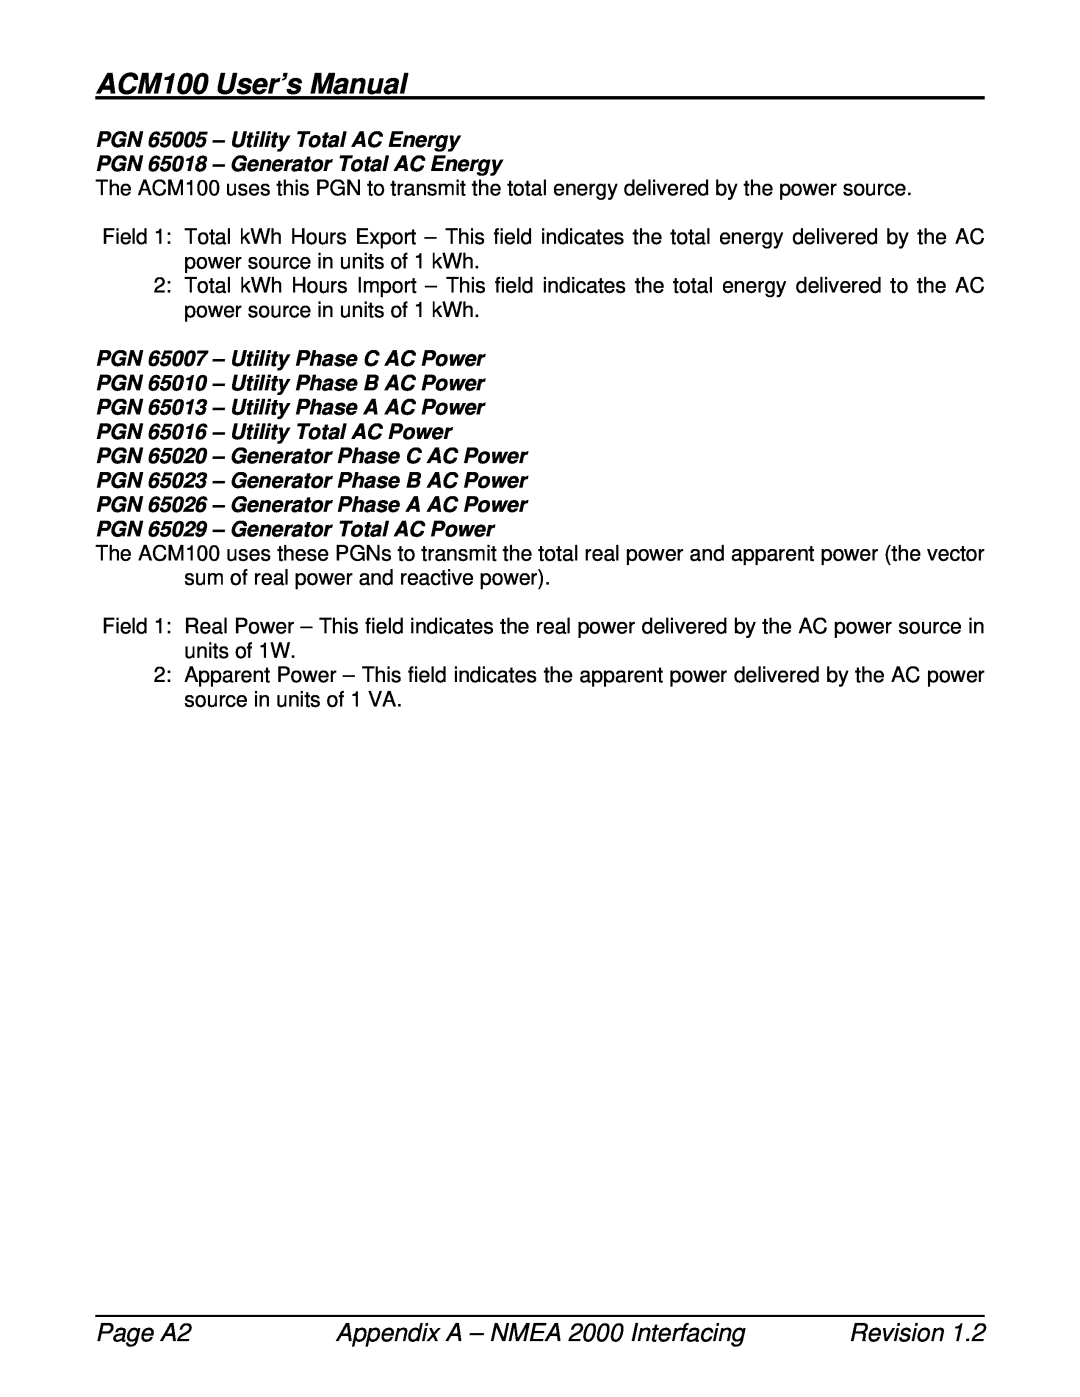 Maretron user manual Page A2, ACM100 User’s Manual, Appendix A - NMEA 2000 Interfacing, Revision 